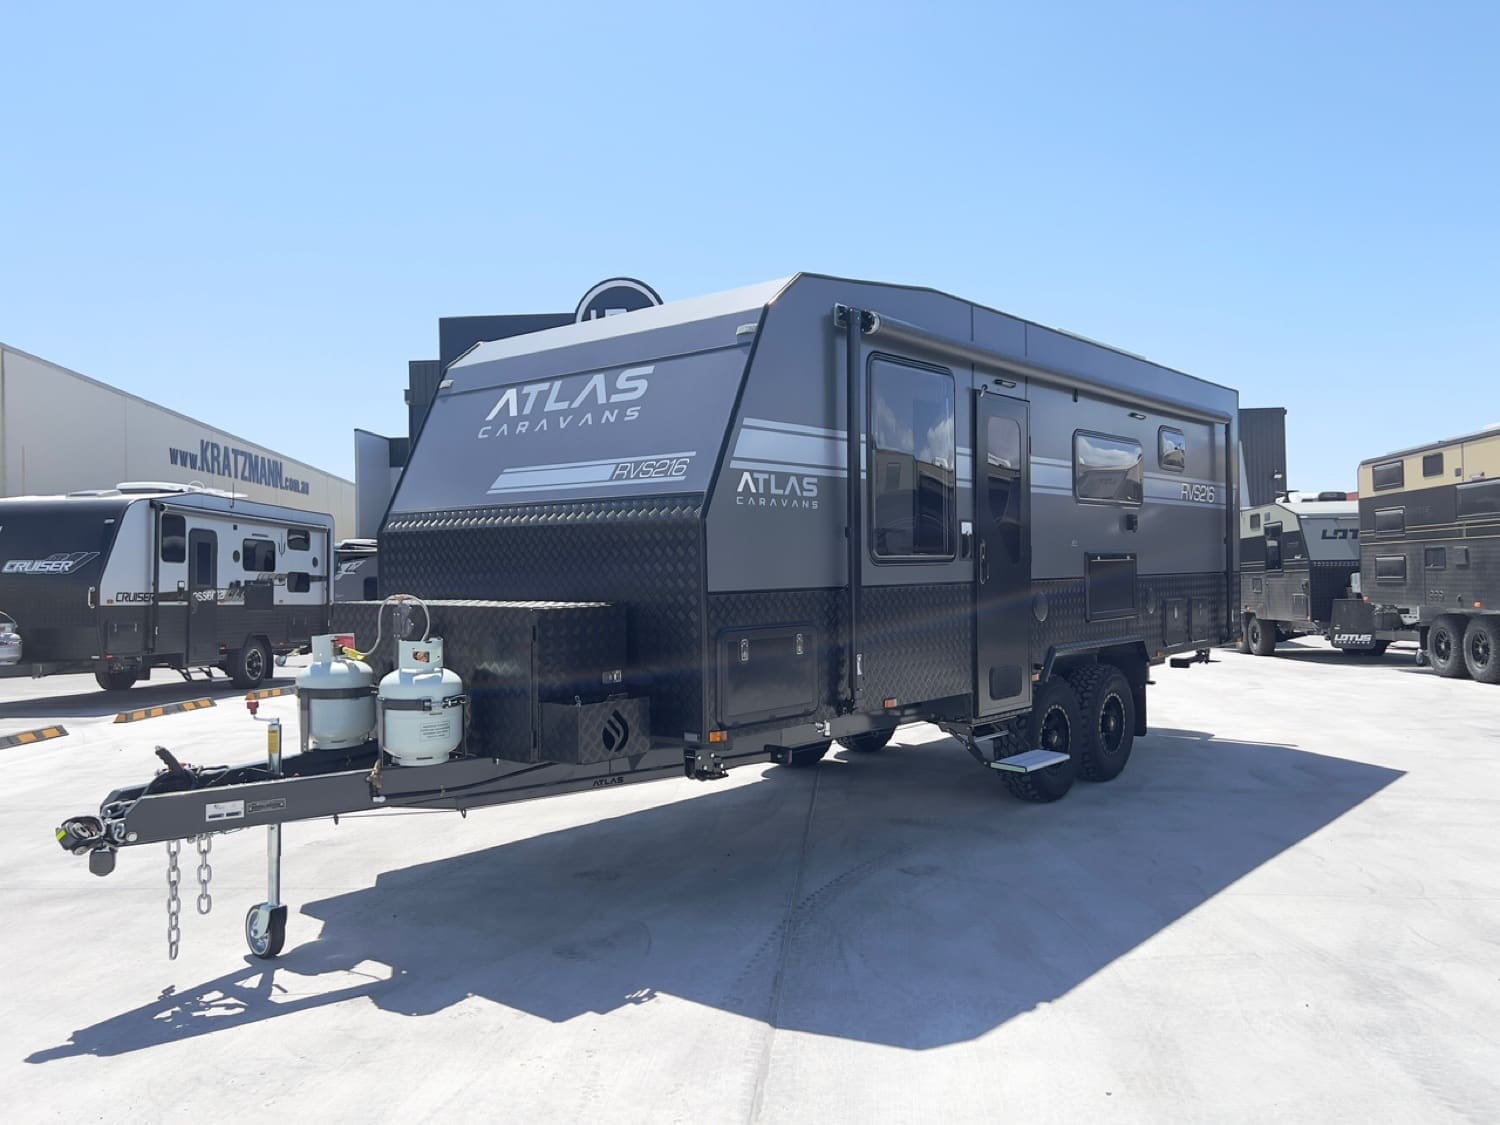 ATLAS CARAVANS RVS216 - Caravans